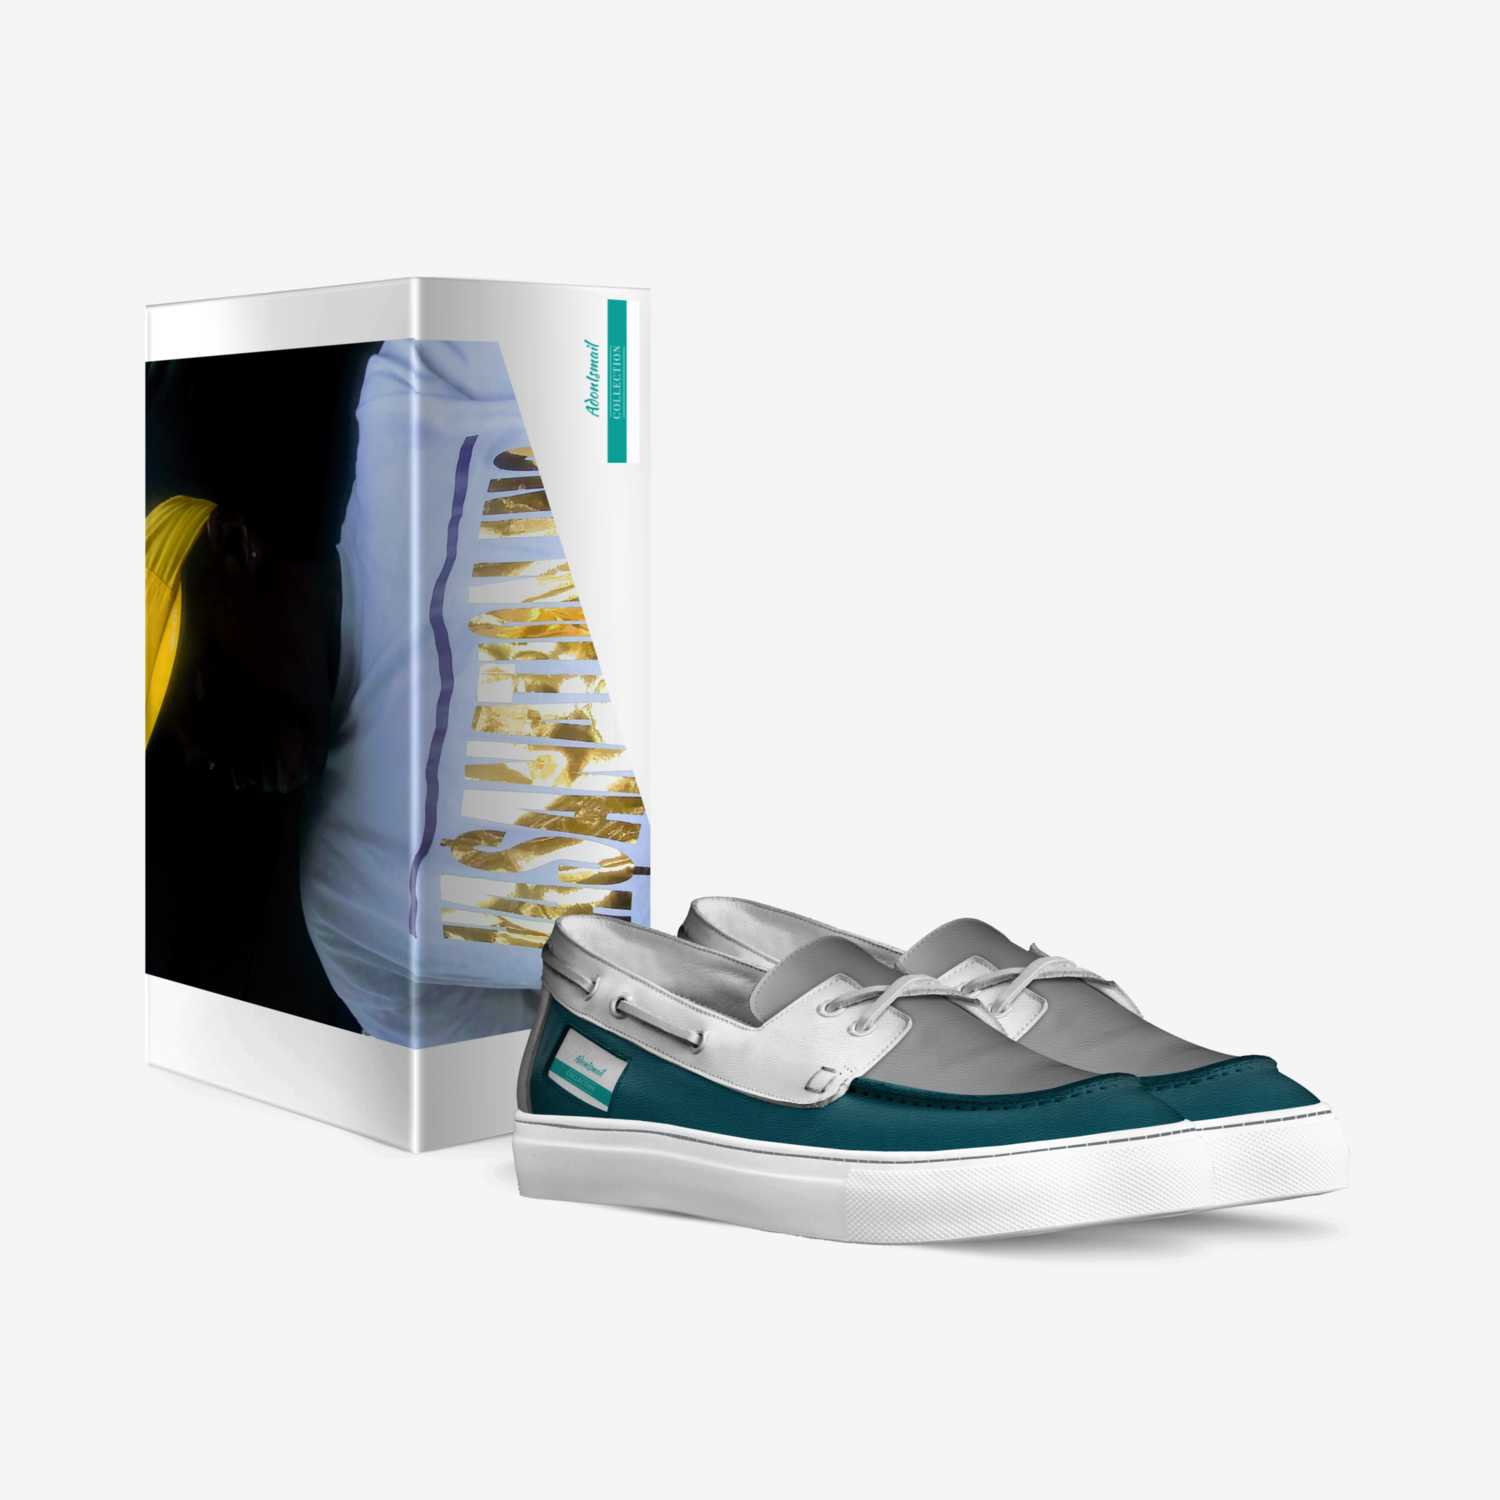 George Bernard mini straal AdonIsmail | A Custom Shoe concept by Don Bonton